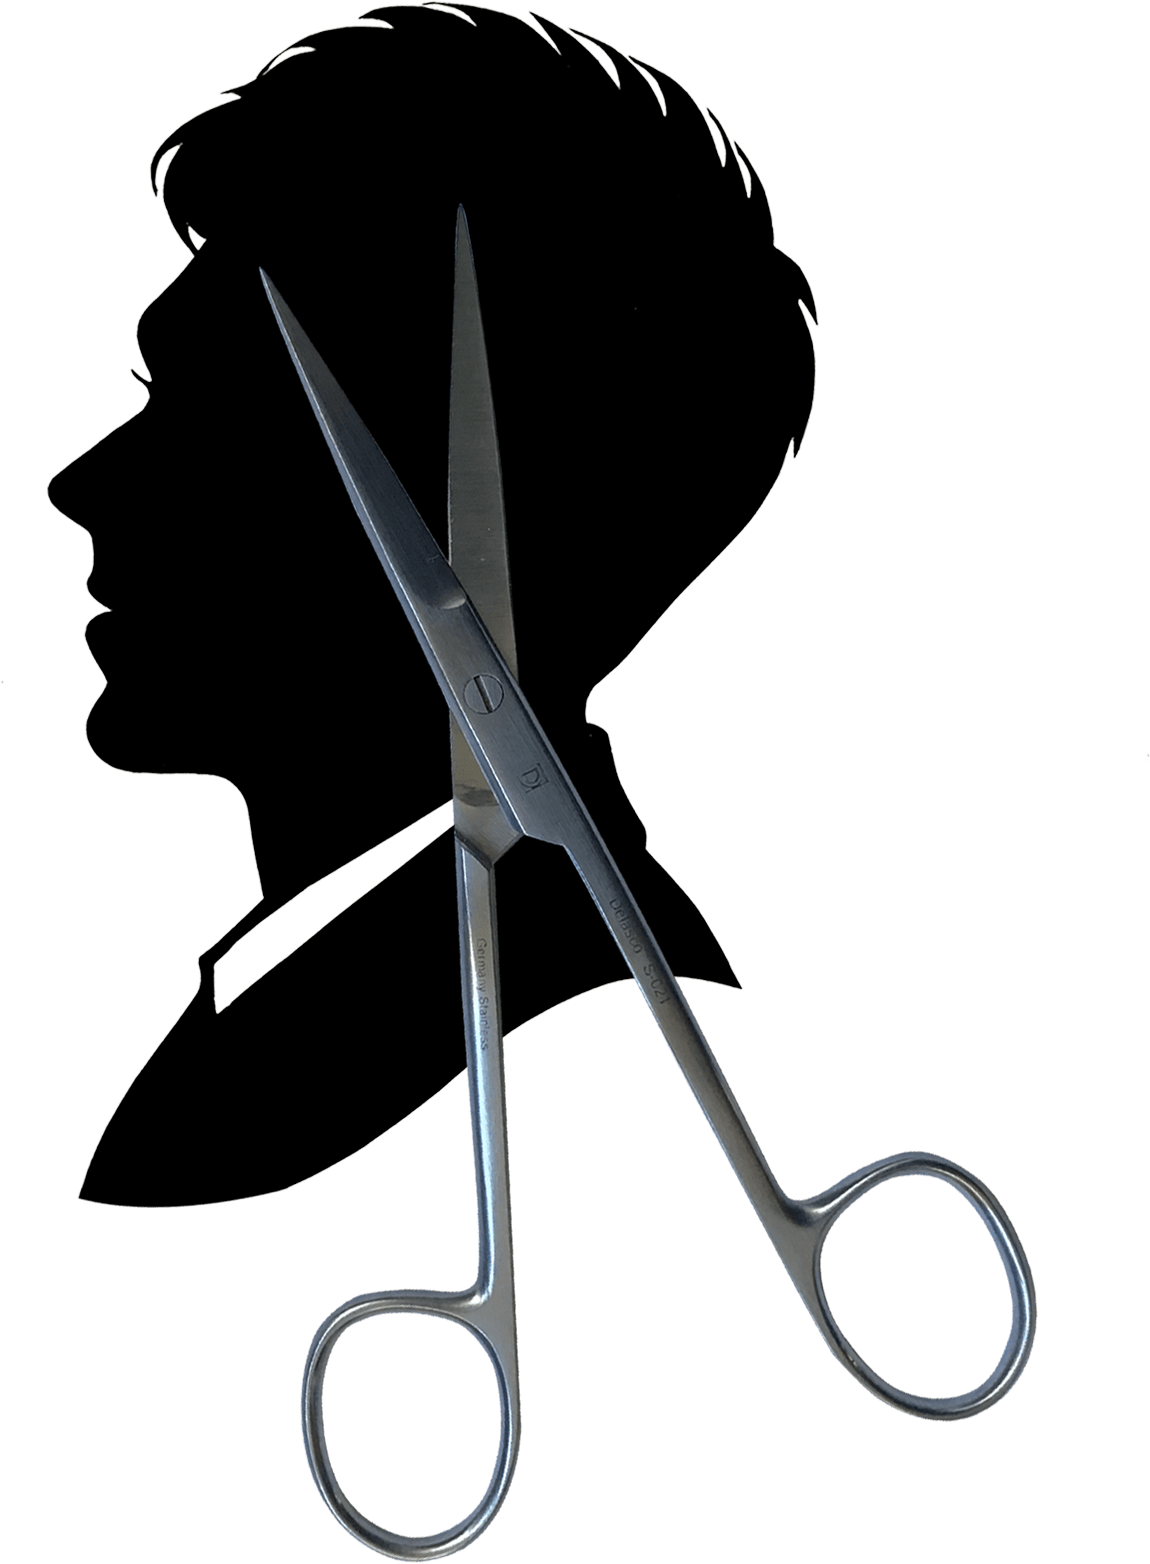 portrait scissors silhouette cutting head